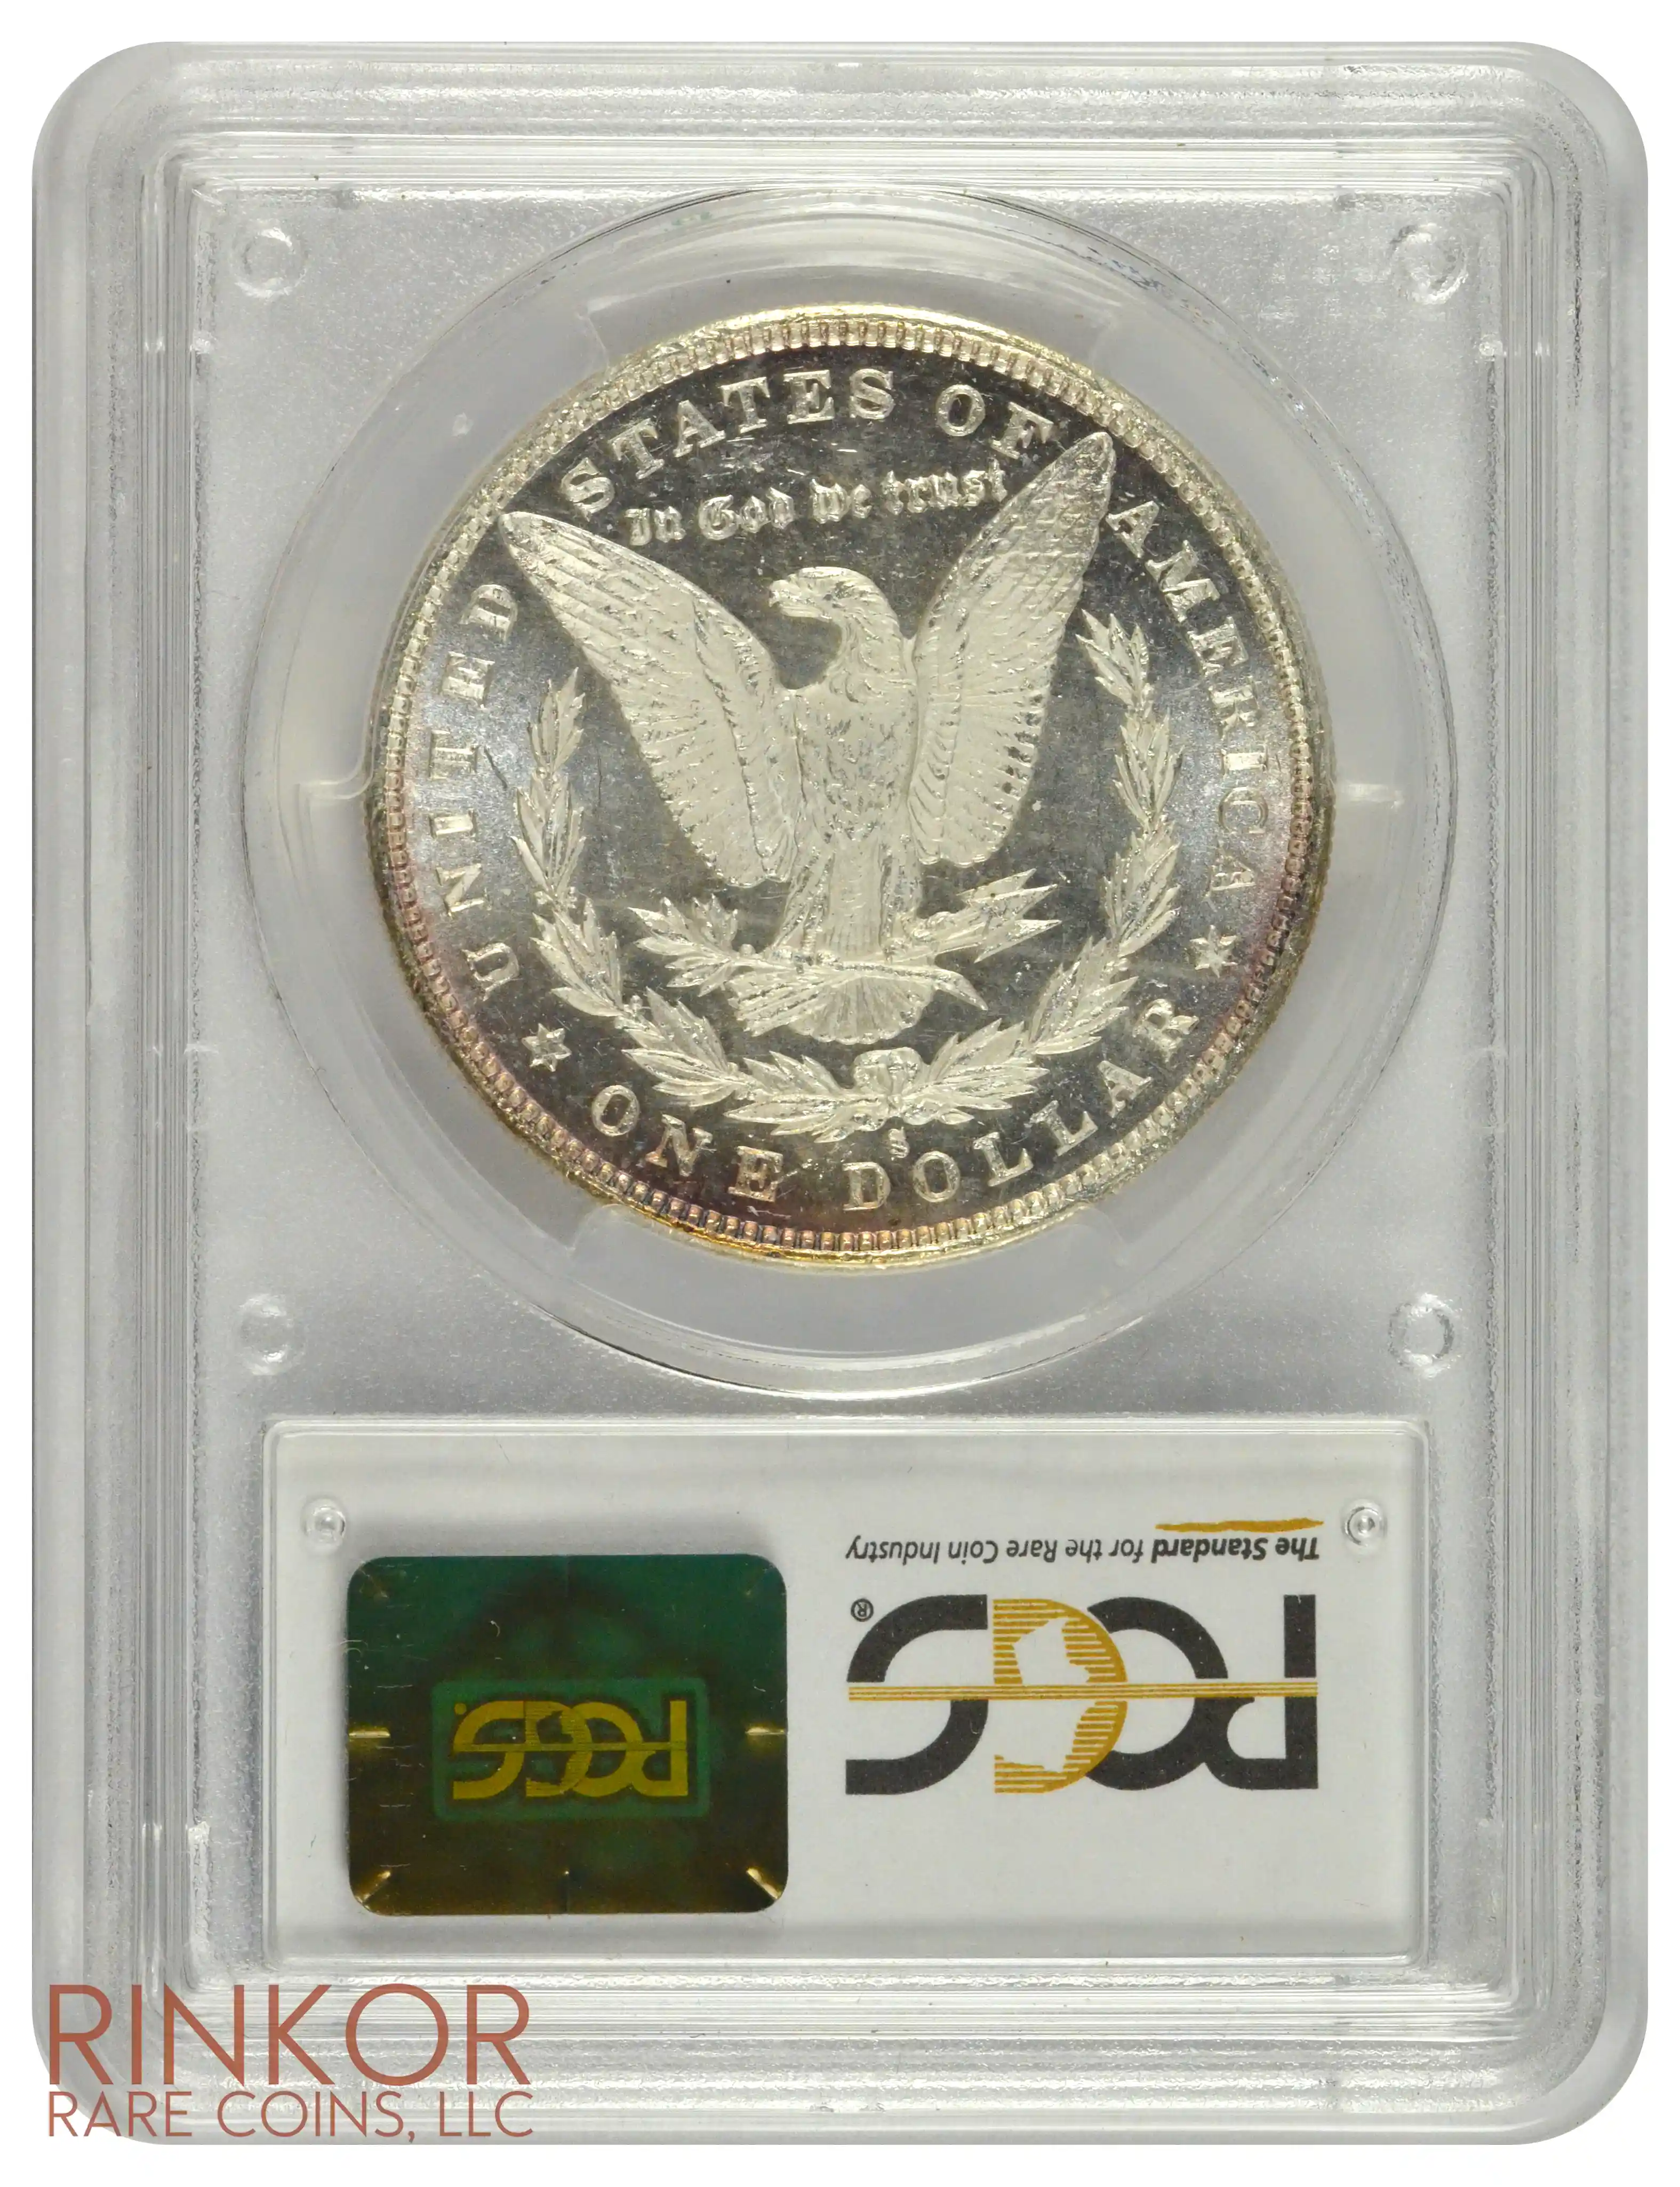 1880-S $1 PCGS MS 65 PL CAC